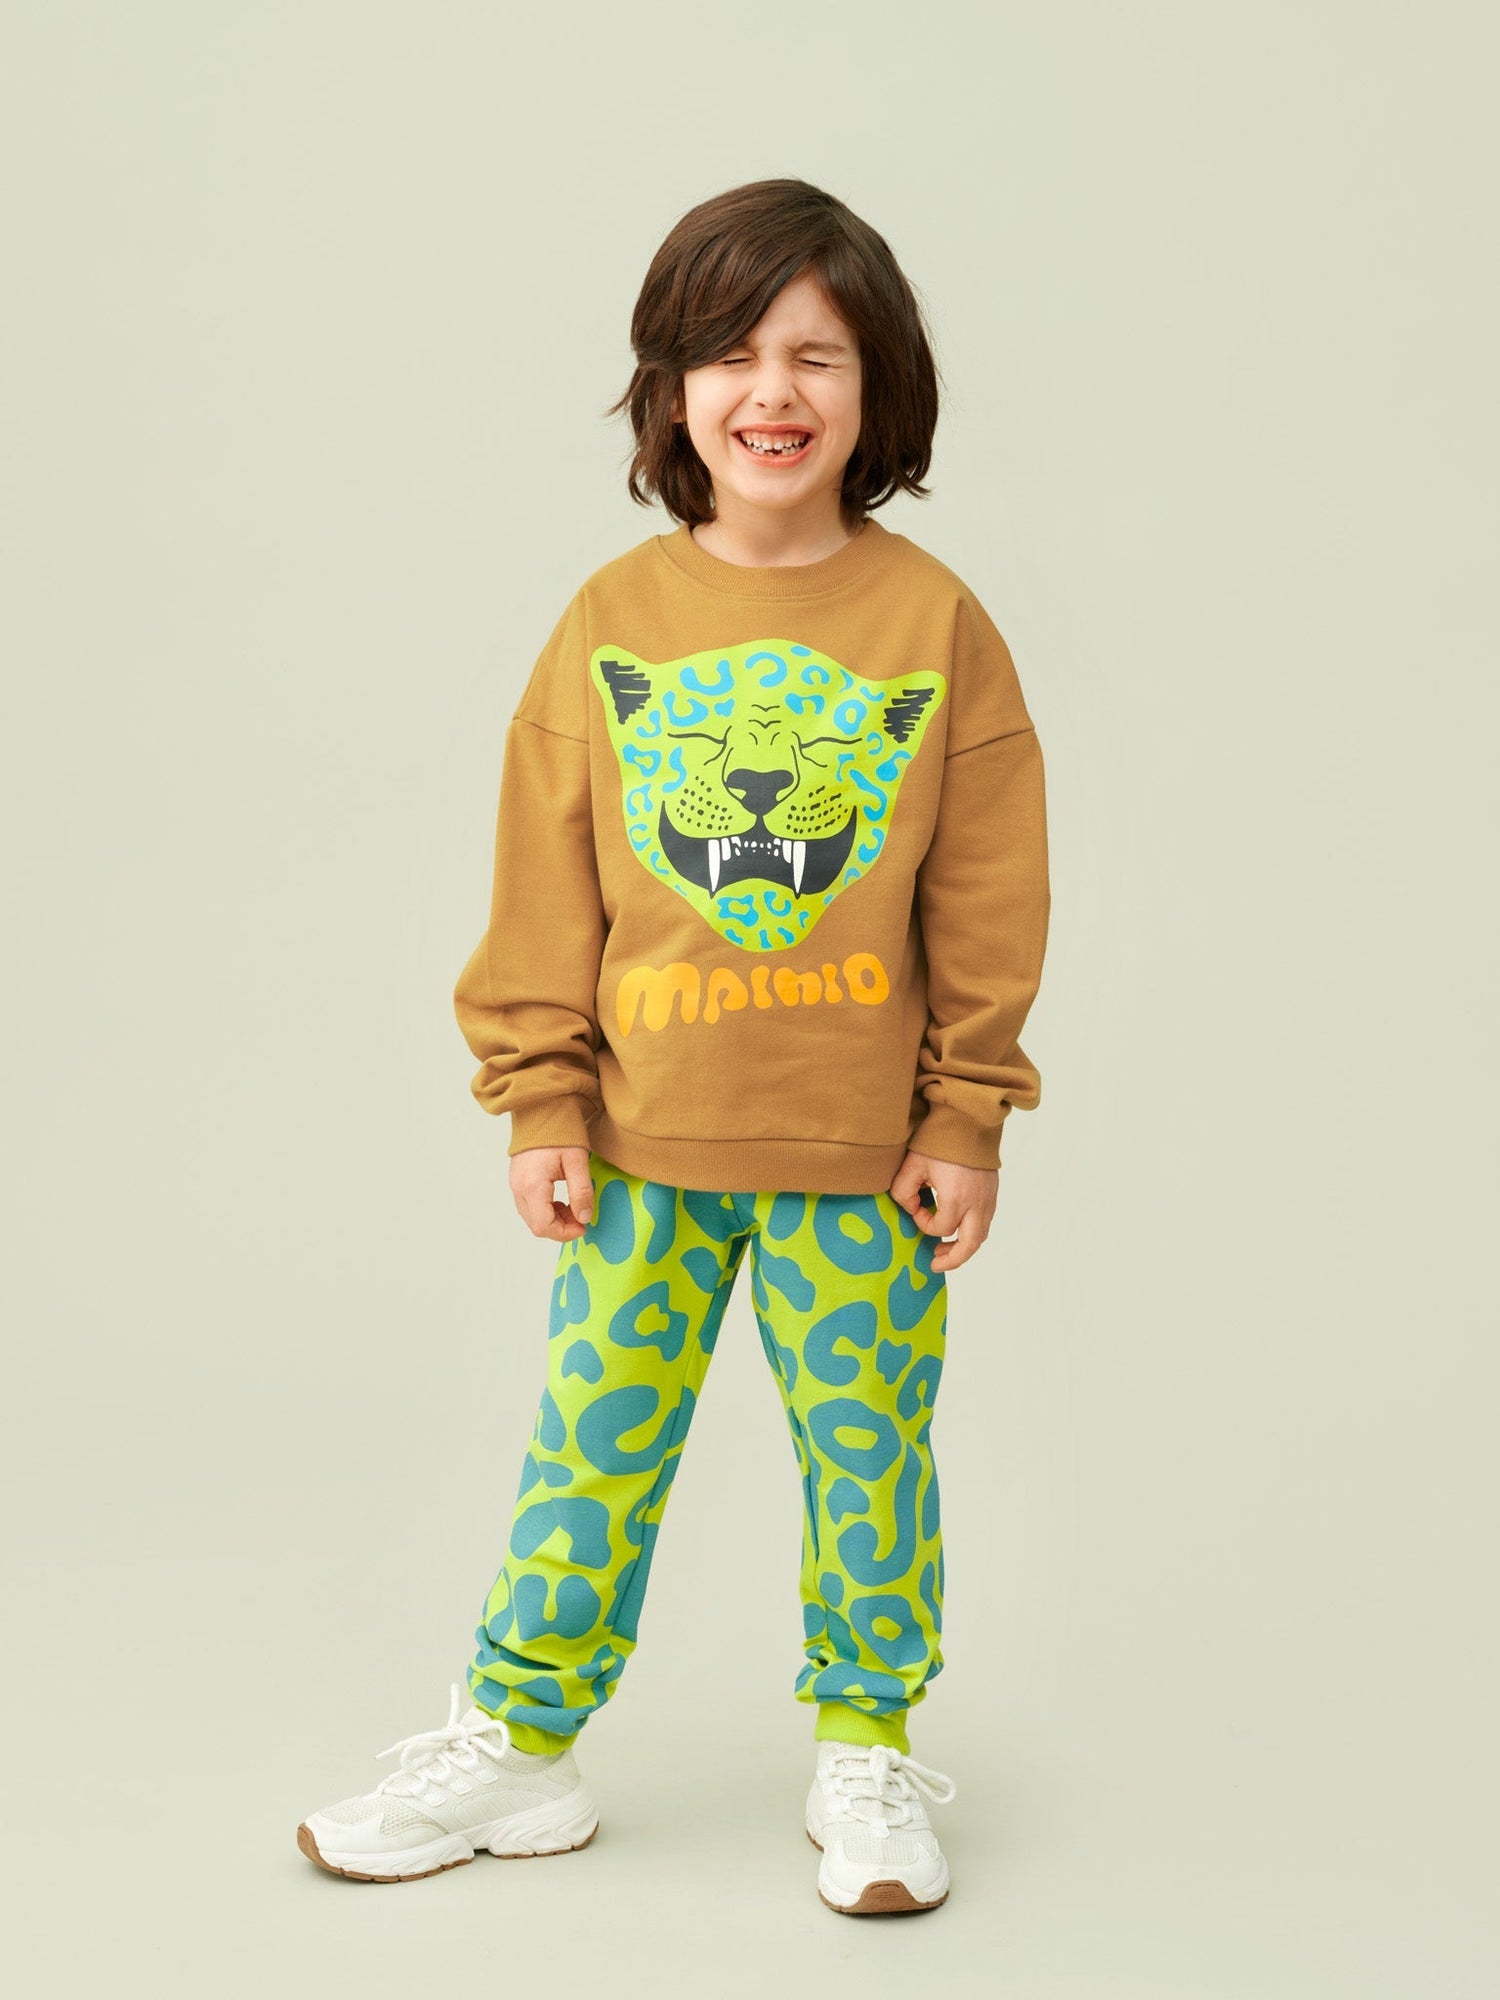 Kids' Leo Mainio Sweatshirt